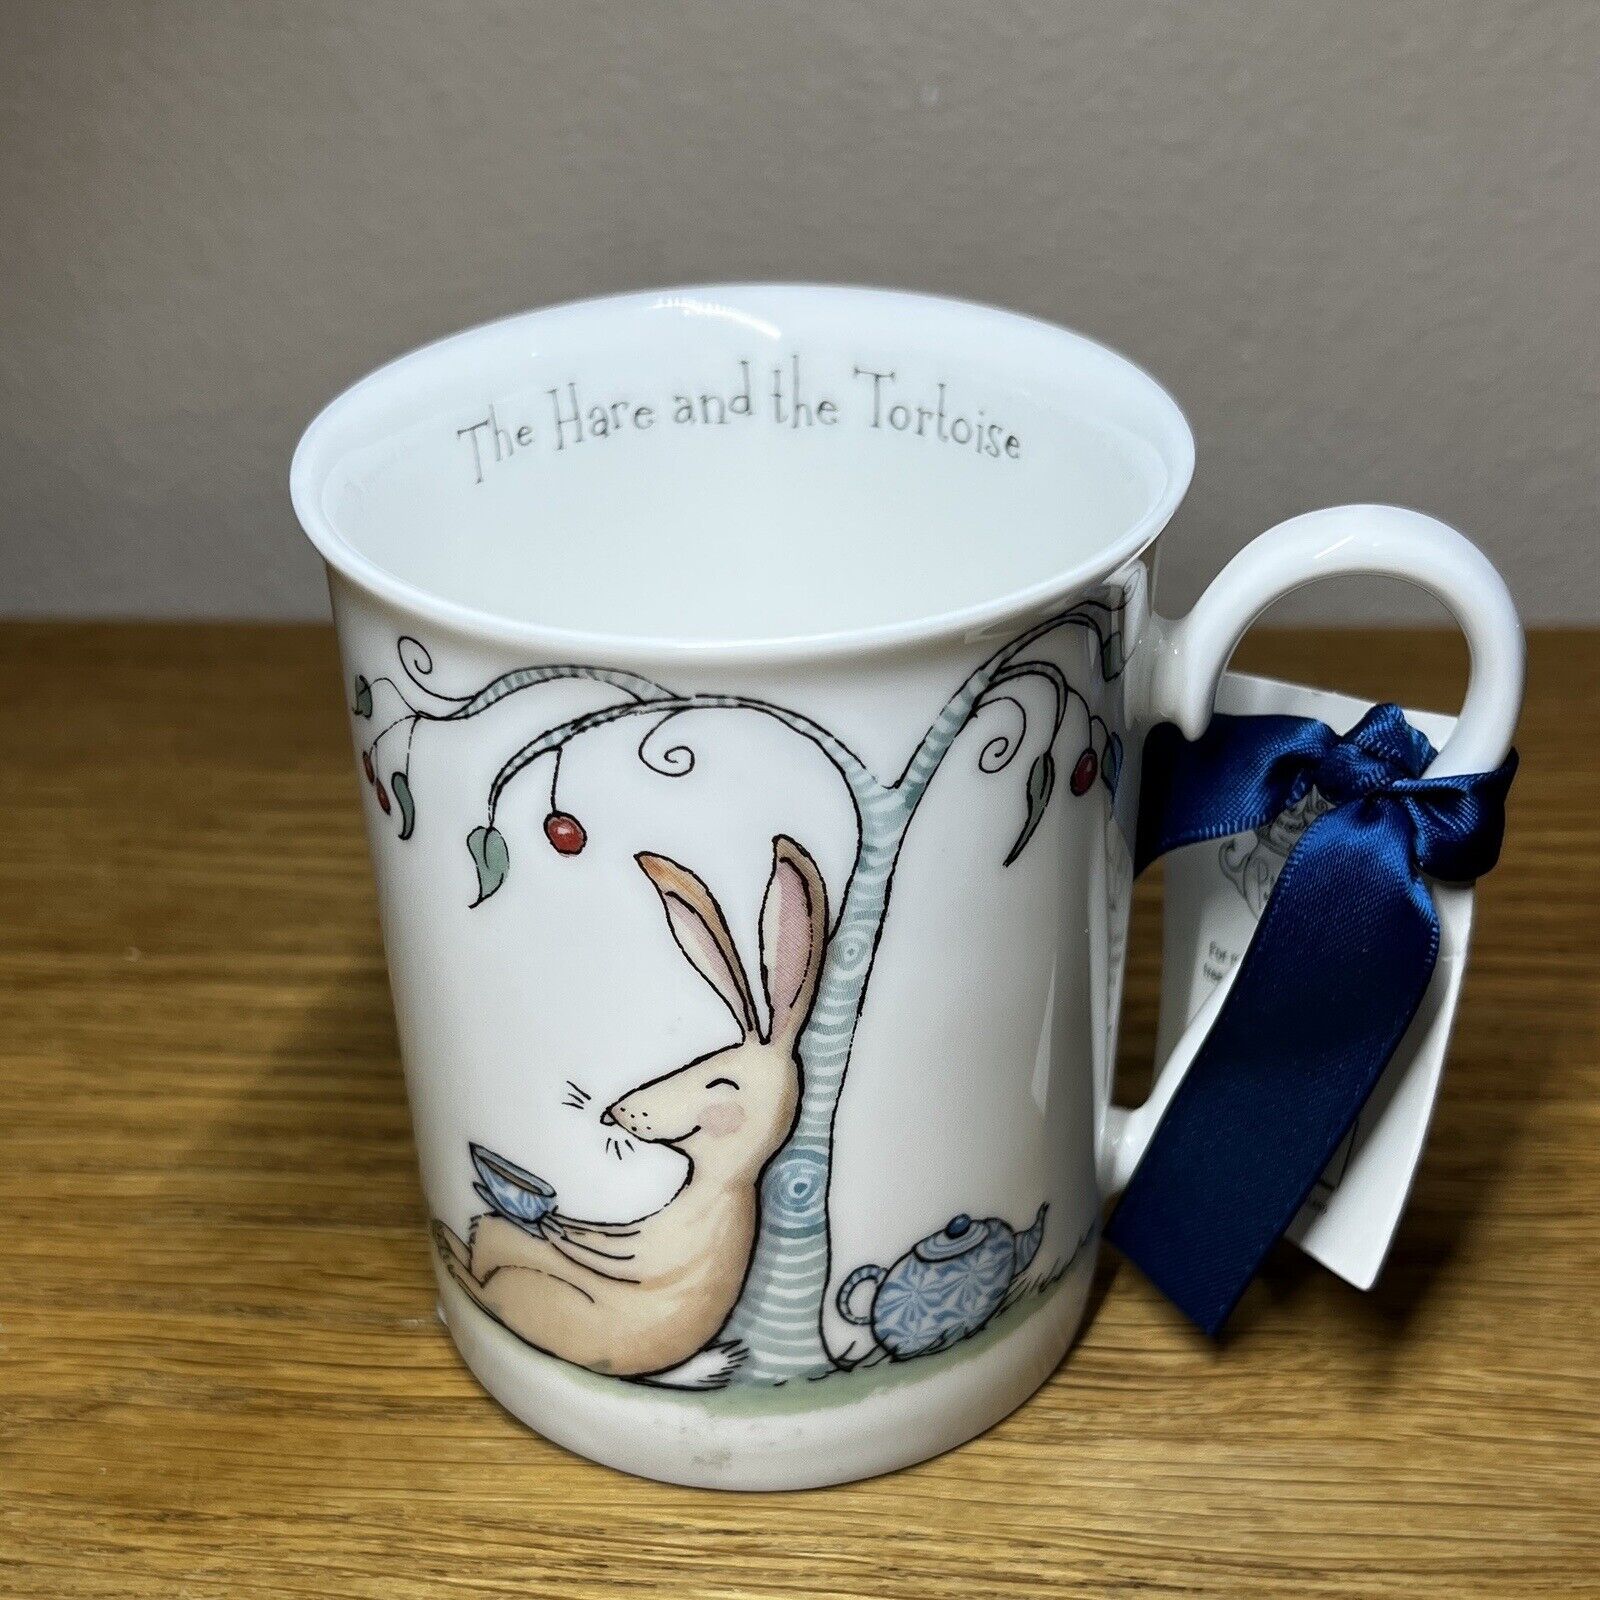 Whittard of Chelsea Nursery Rhyme Easter Mug “The Hare and the Tortoise”